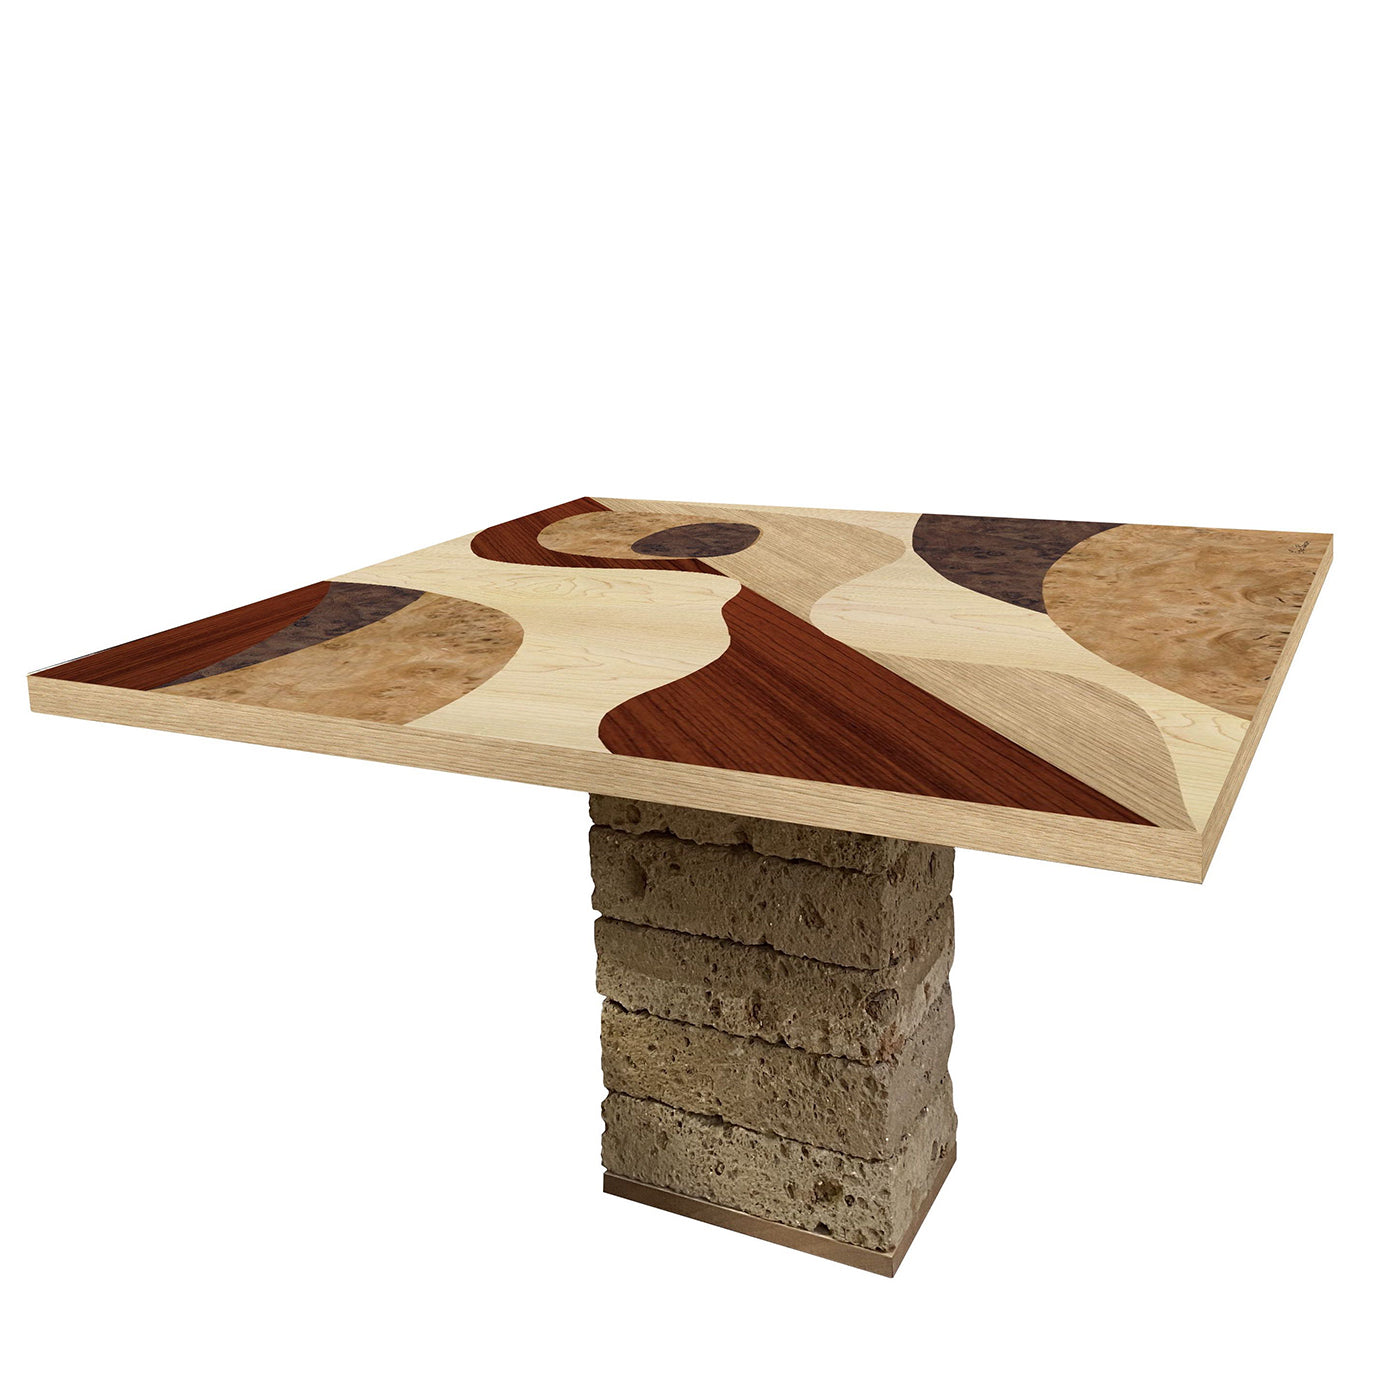 Tarsia Tables Tt4 Square Polychrome Table by Mascia Meccani - Alternative view 2